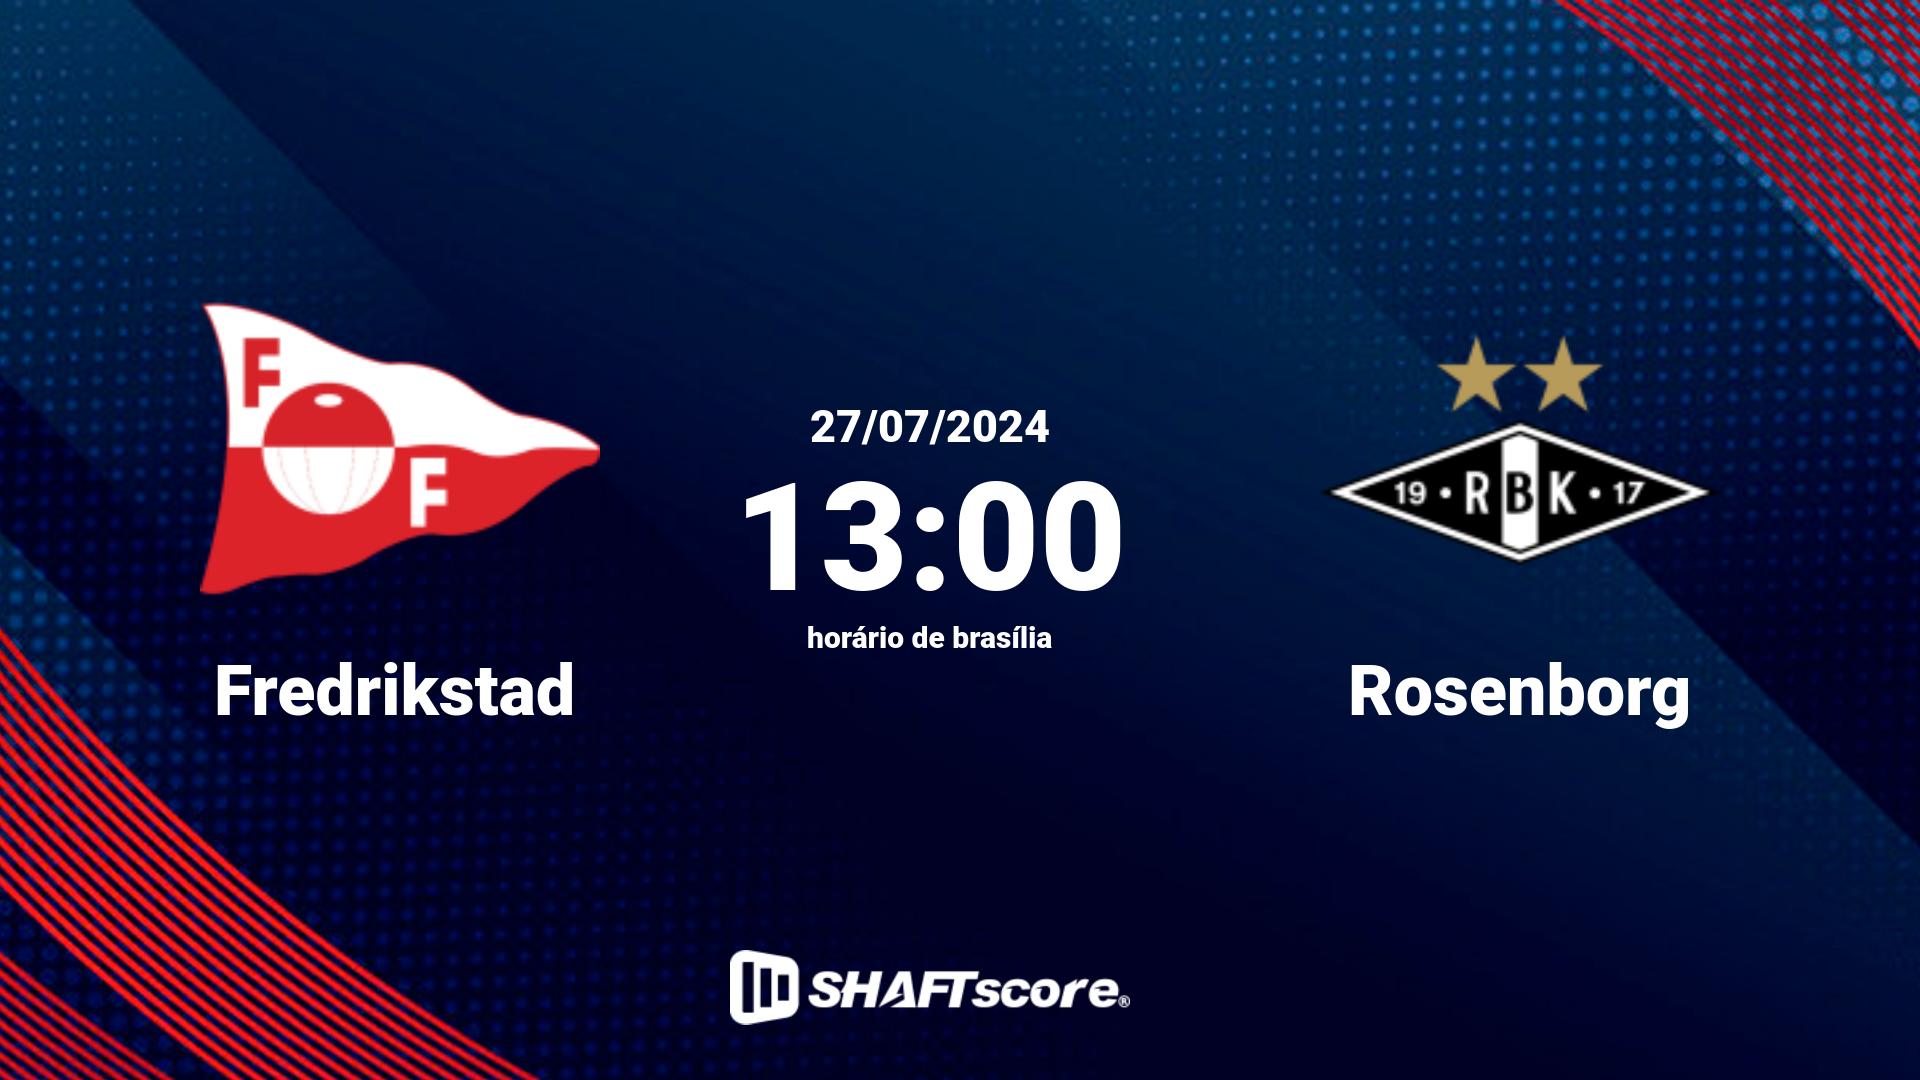 Estatísticas do jogo Fredrikstad vs Rosenborg 27.07 13:00